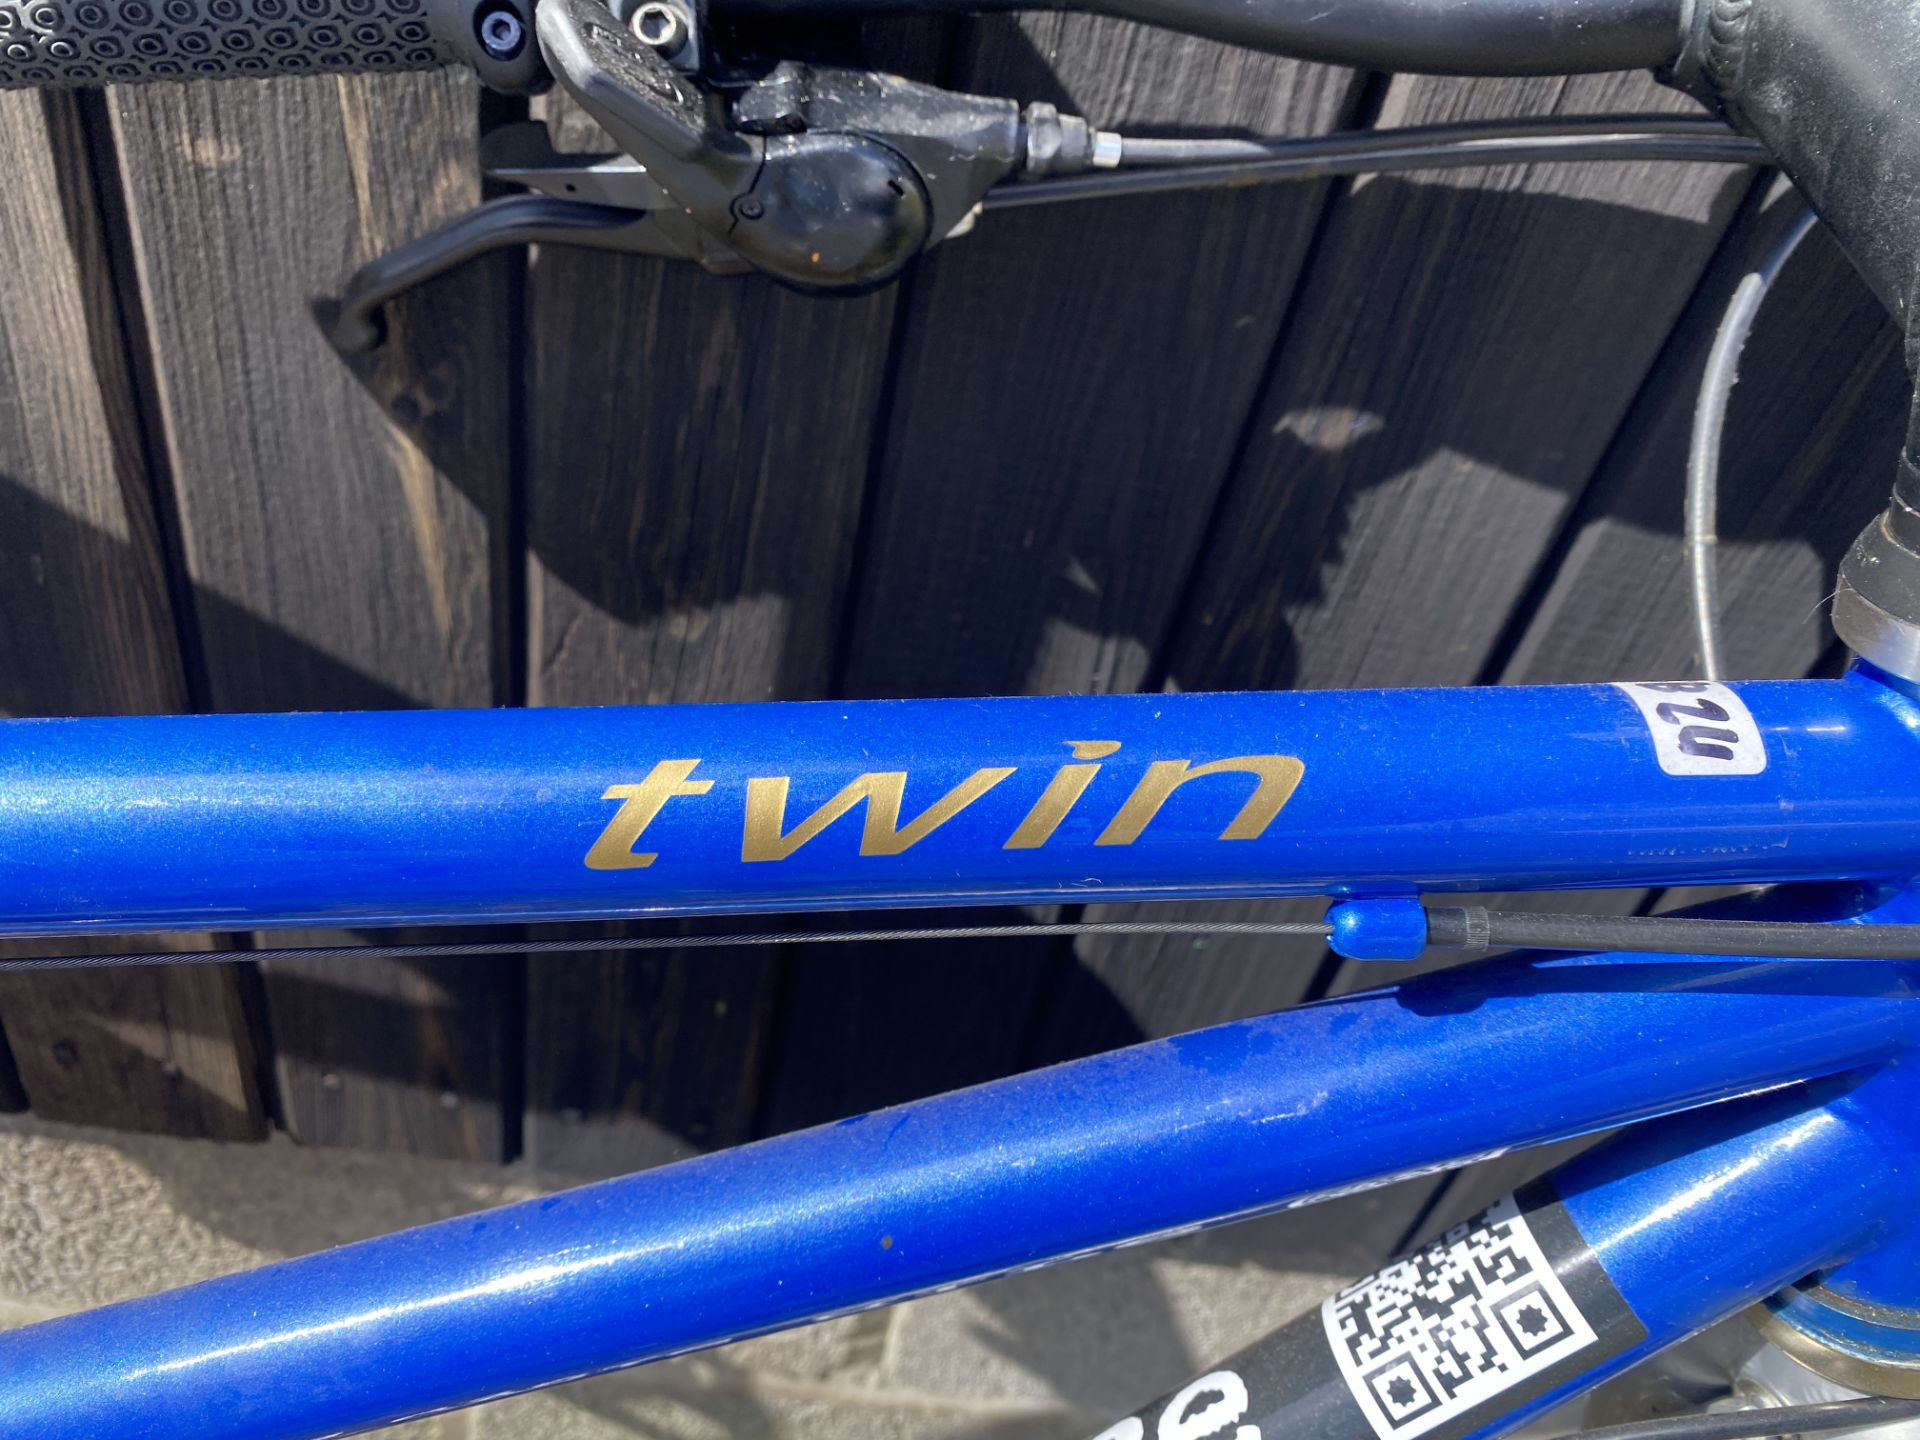 Orbit Twin Tandem bike with frame mounted tyre pump, seat bag/tool kit, 1 drink holder, 20" frame - Image 3 of 8